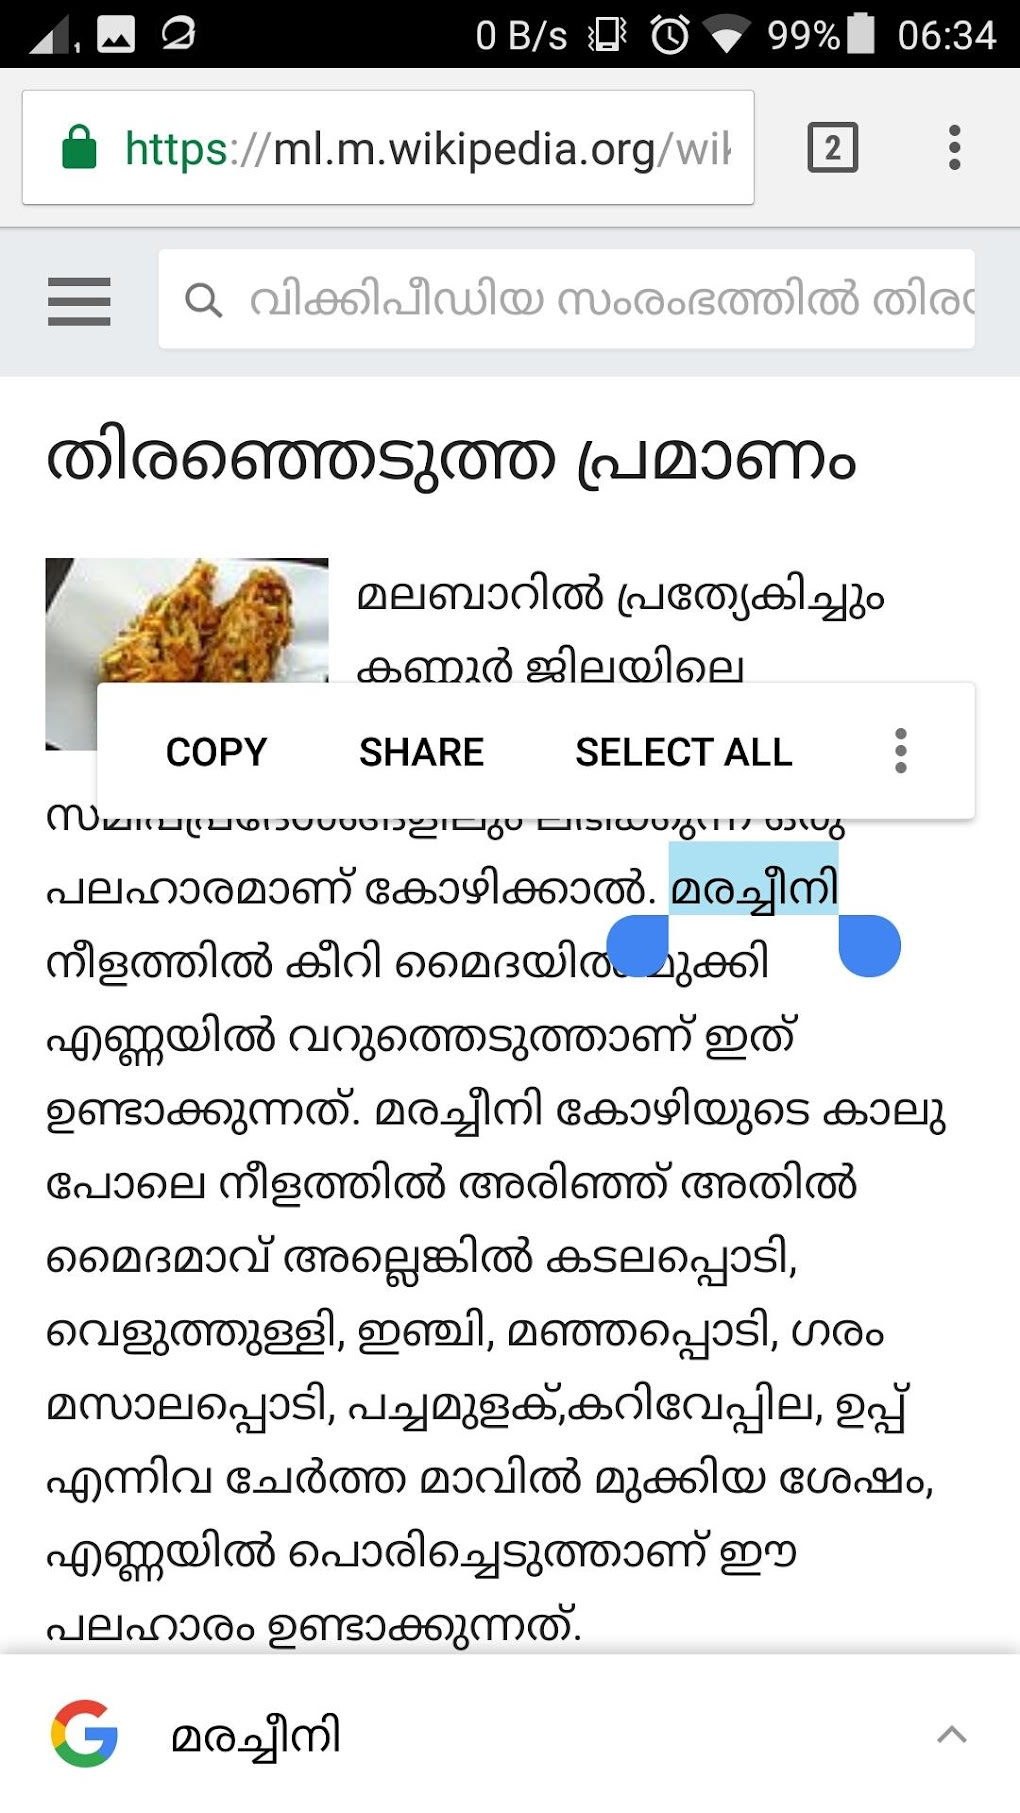 clutching meaning in Malayalam  clutching translation in Malayalam -  Shabdkosh